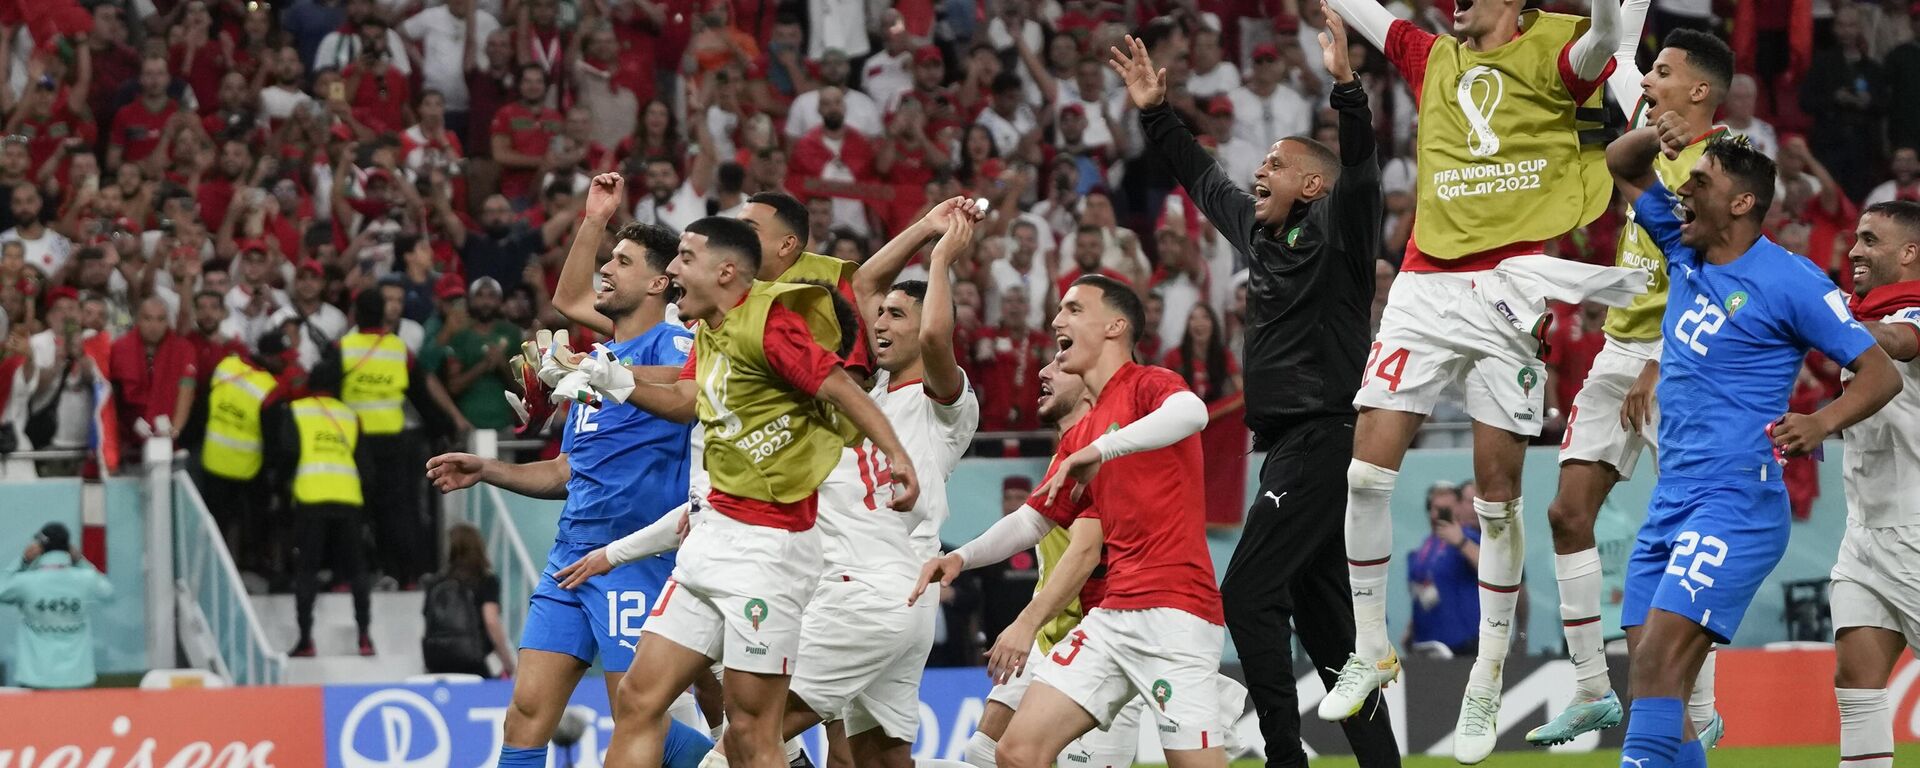 Marruecos derrotó a Bélgica y es puntero del grupo F de Catar 2022 - Sputnik Mundo, 1920, 27.11.2022